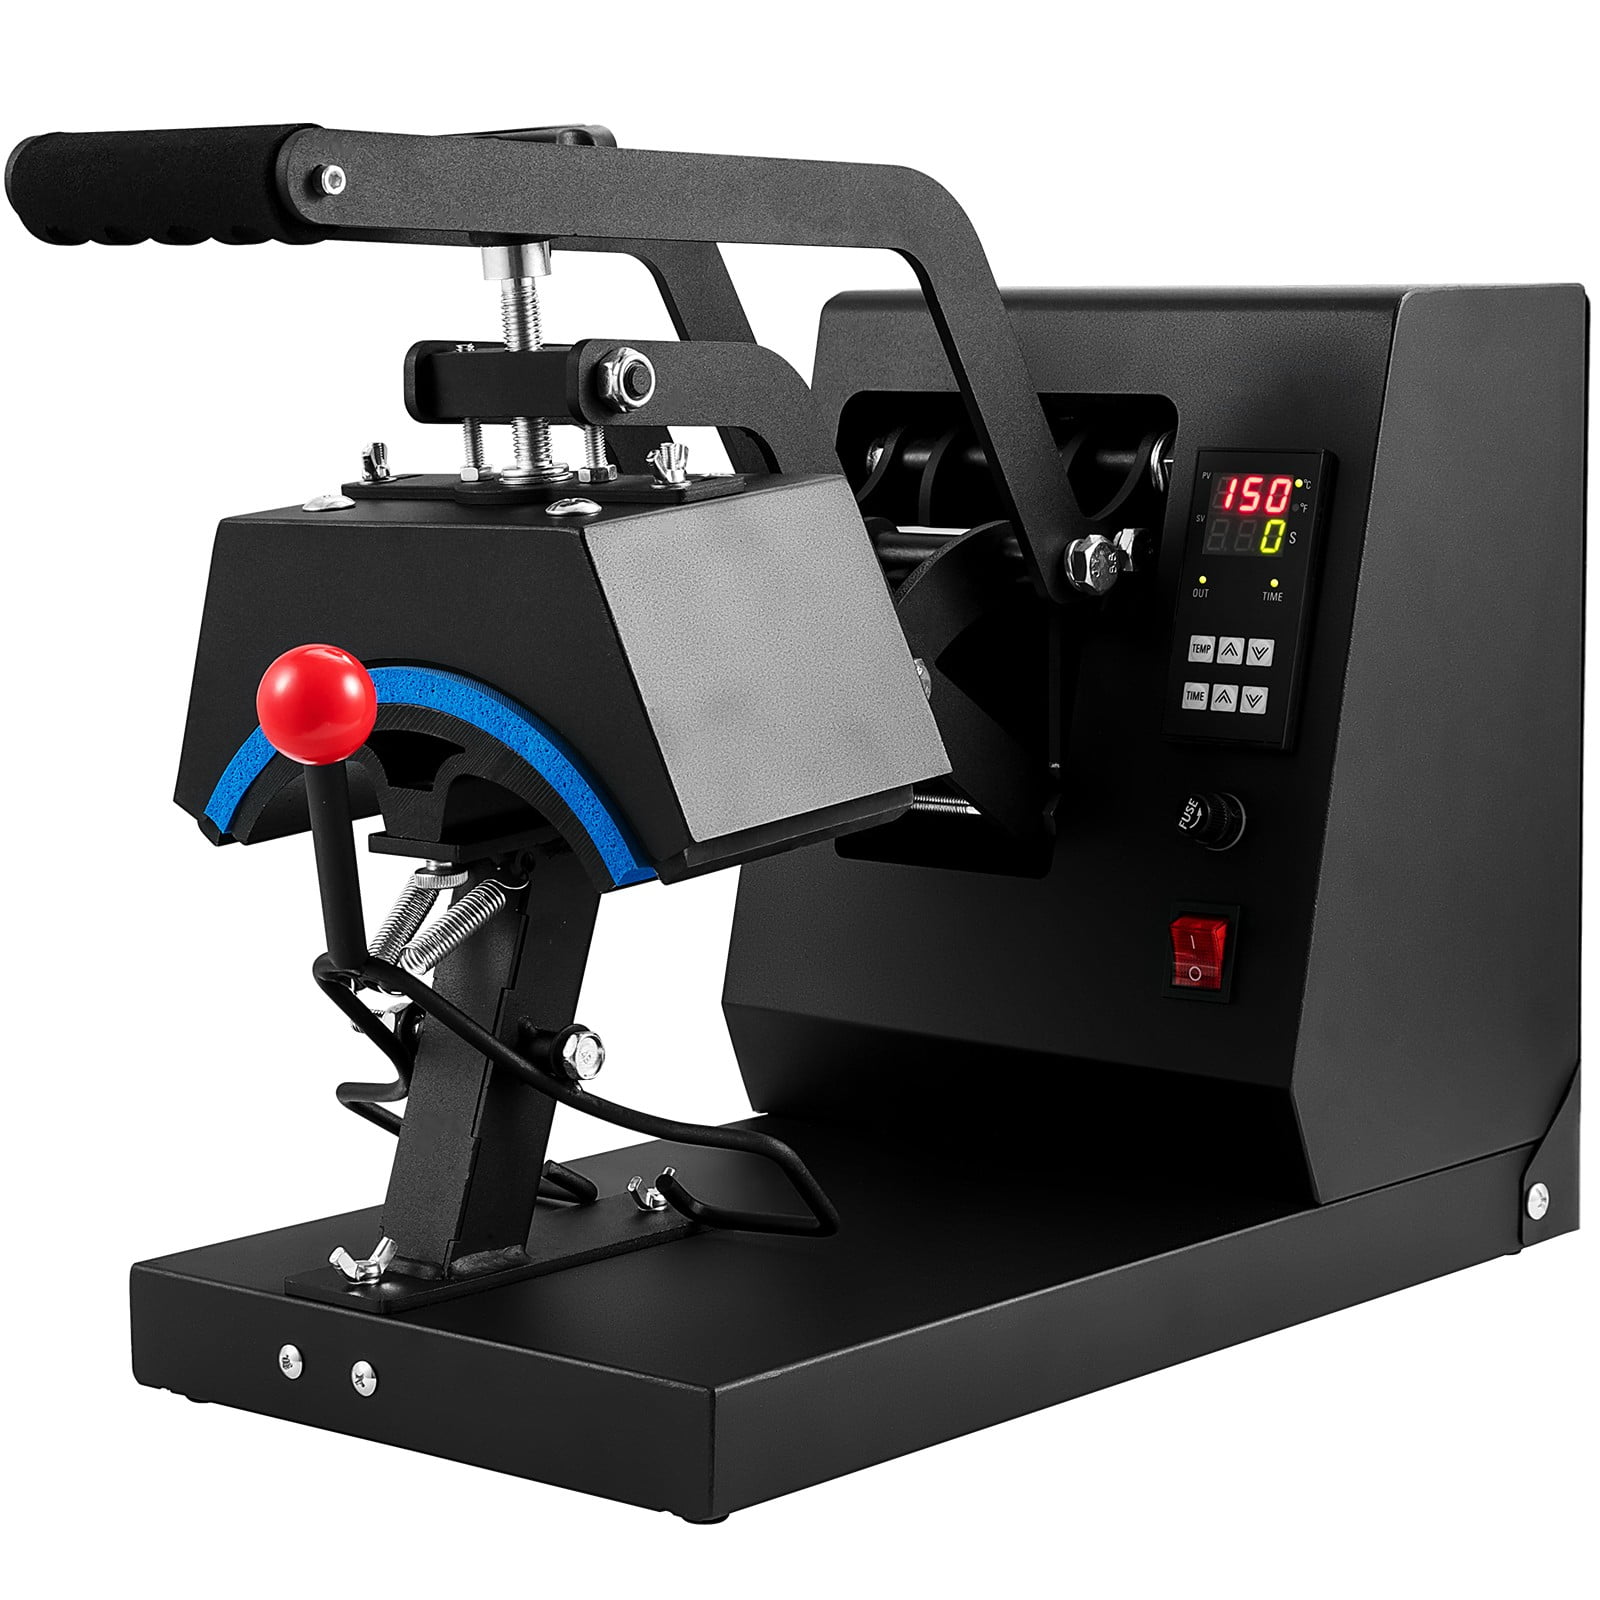 TheLAShop Digital Cap Hat Heat Press Machine Sublimation Transfer